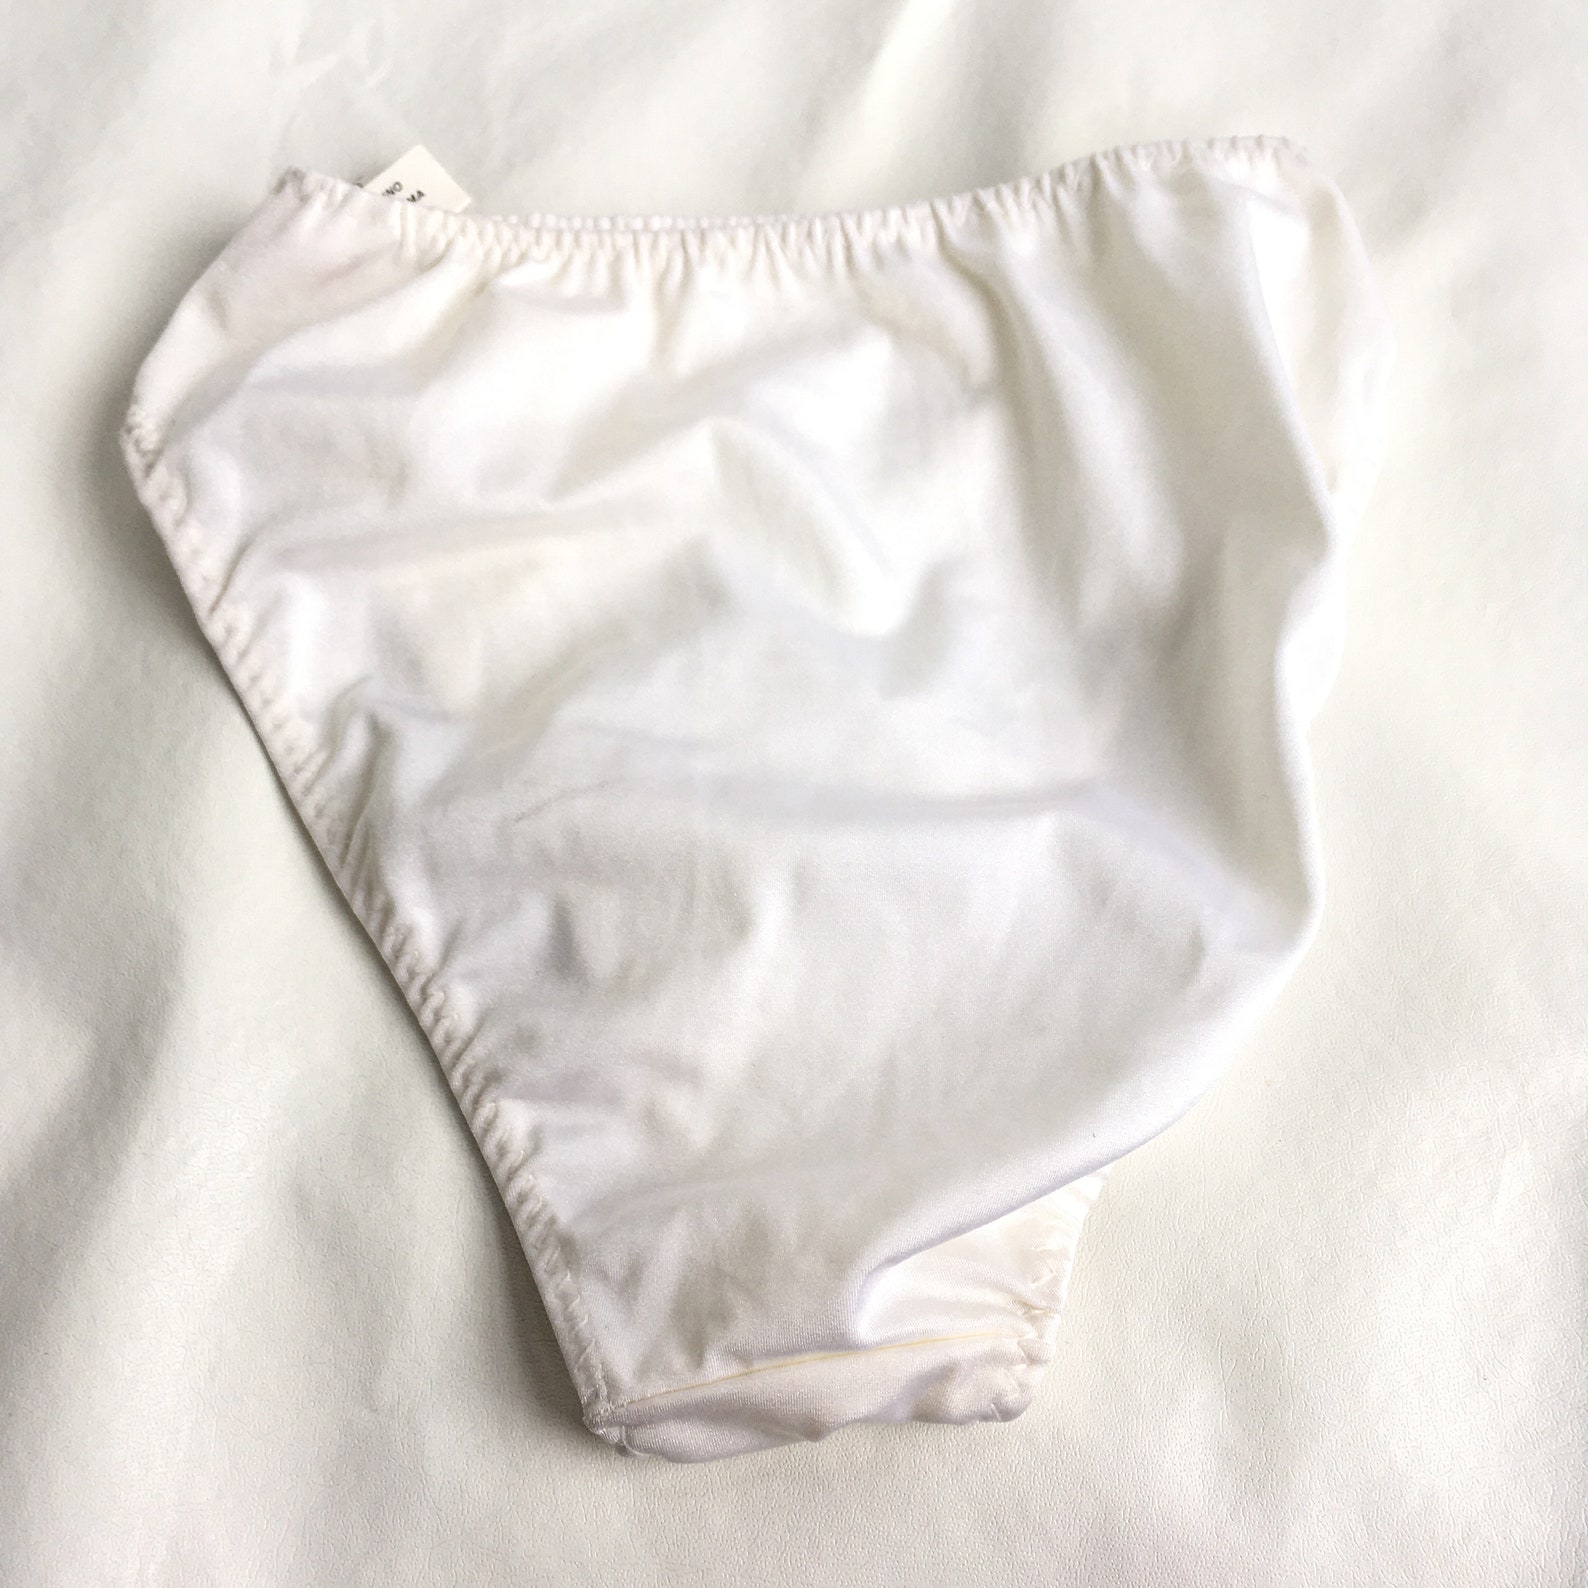 Super Form french cut panties white nylon high cut hi leg | Etsy